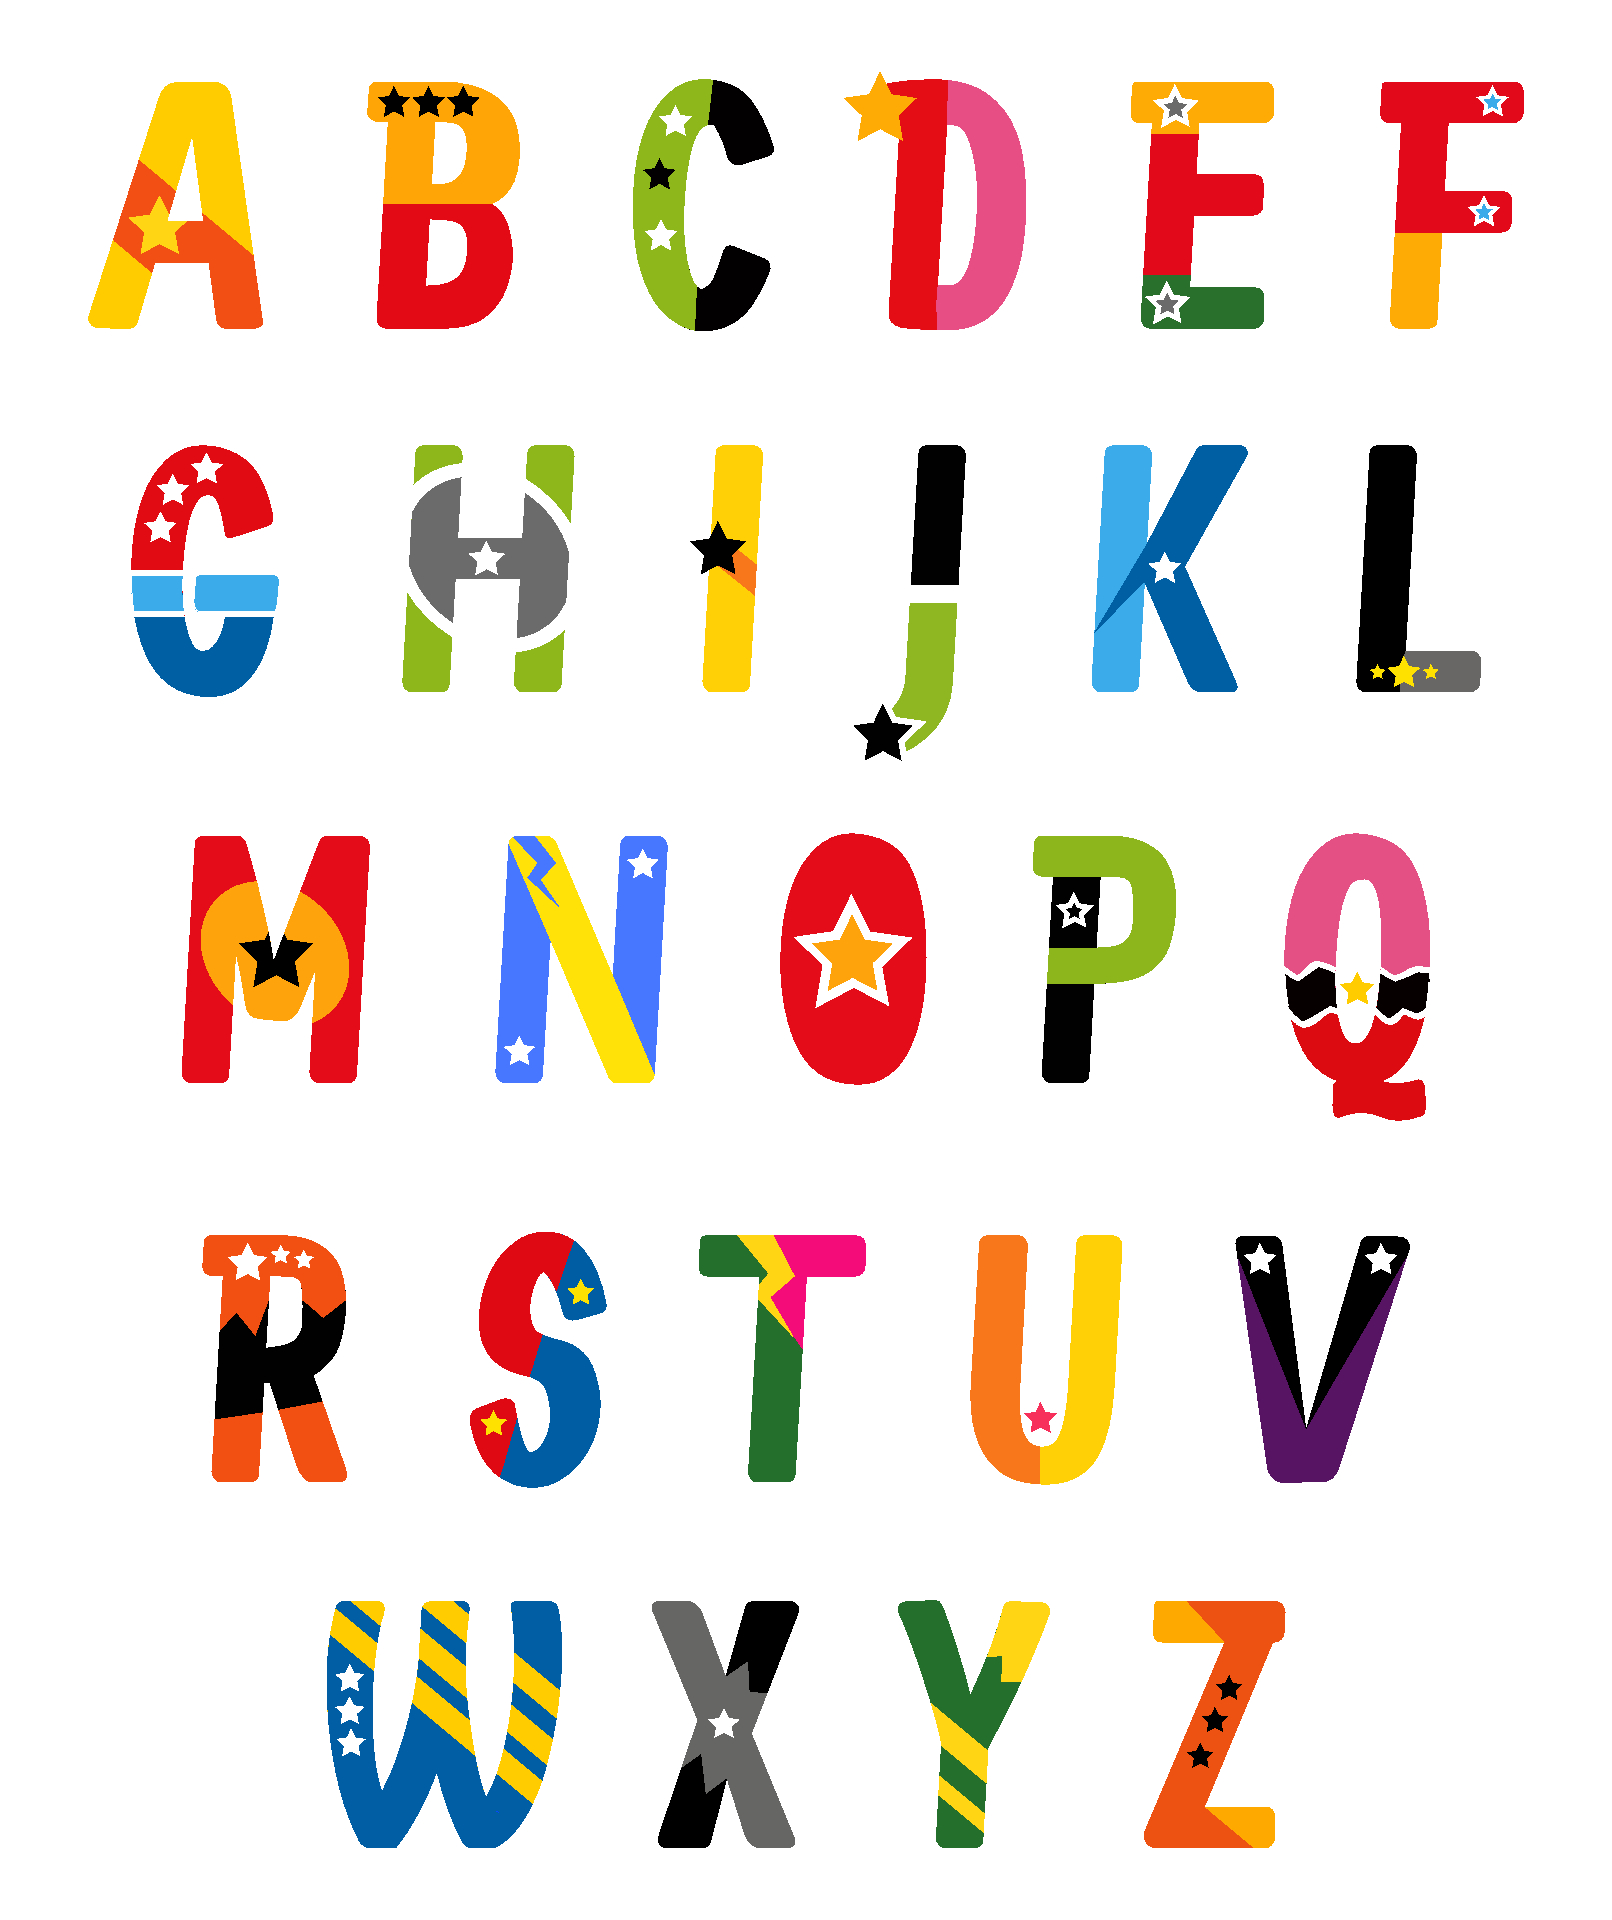 Superhero Alphabet Letters